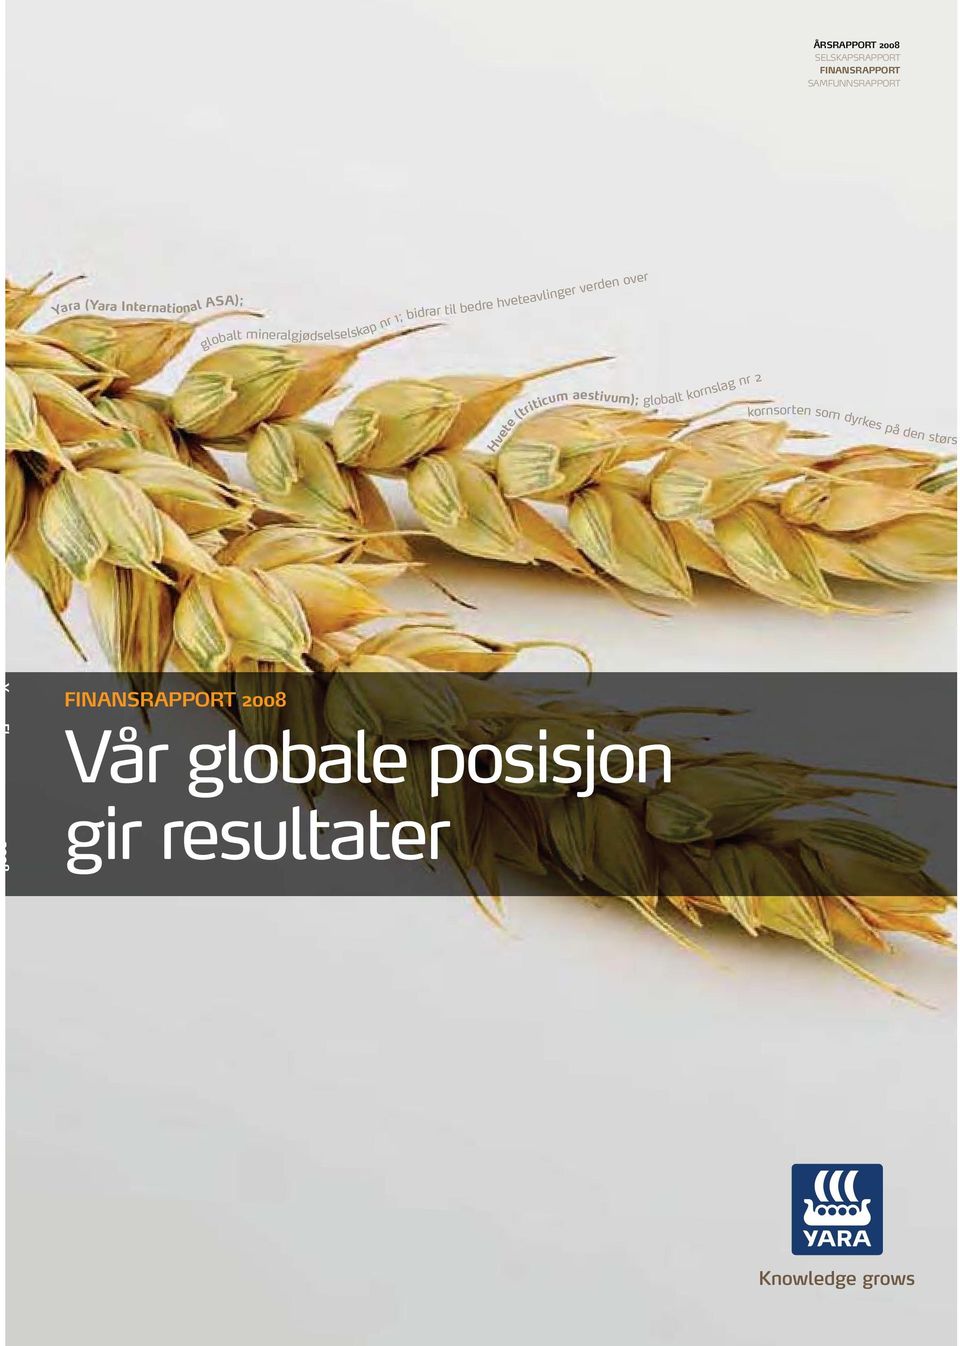 hveteavlinger verden over Hvete (triticum aestivum); globalt kornslag nr 2